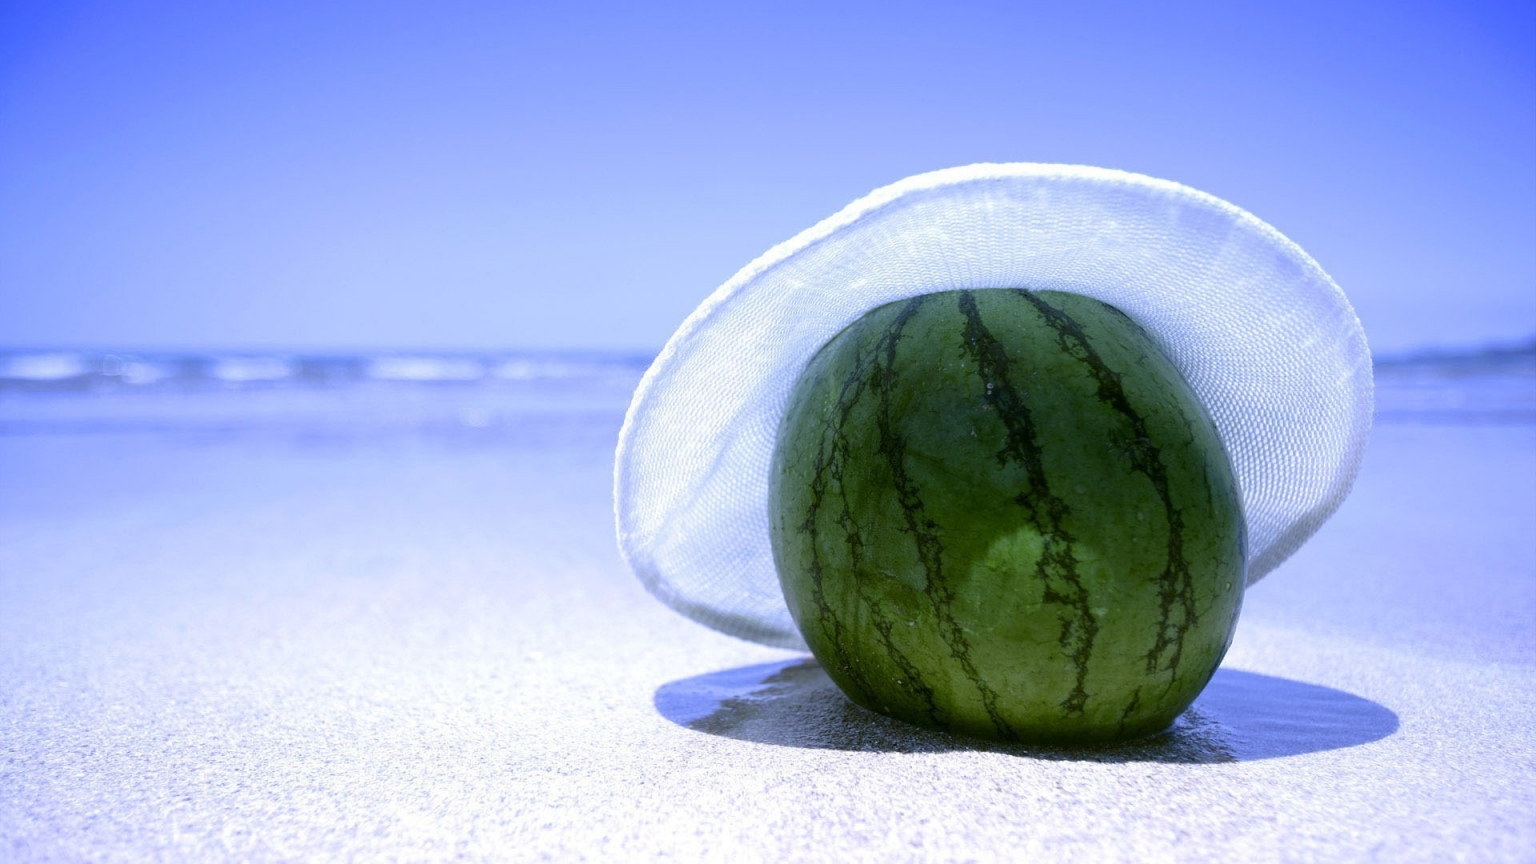 Watermelon on the beach for 1536 x 864 HDTV resolution